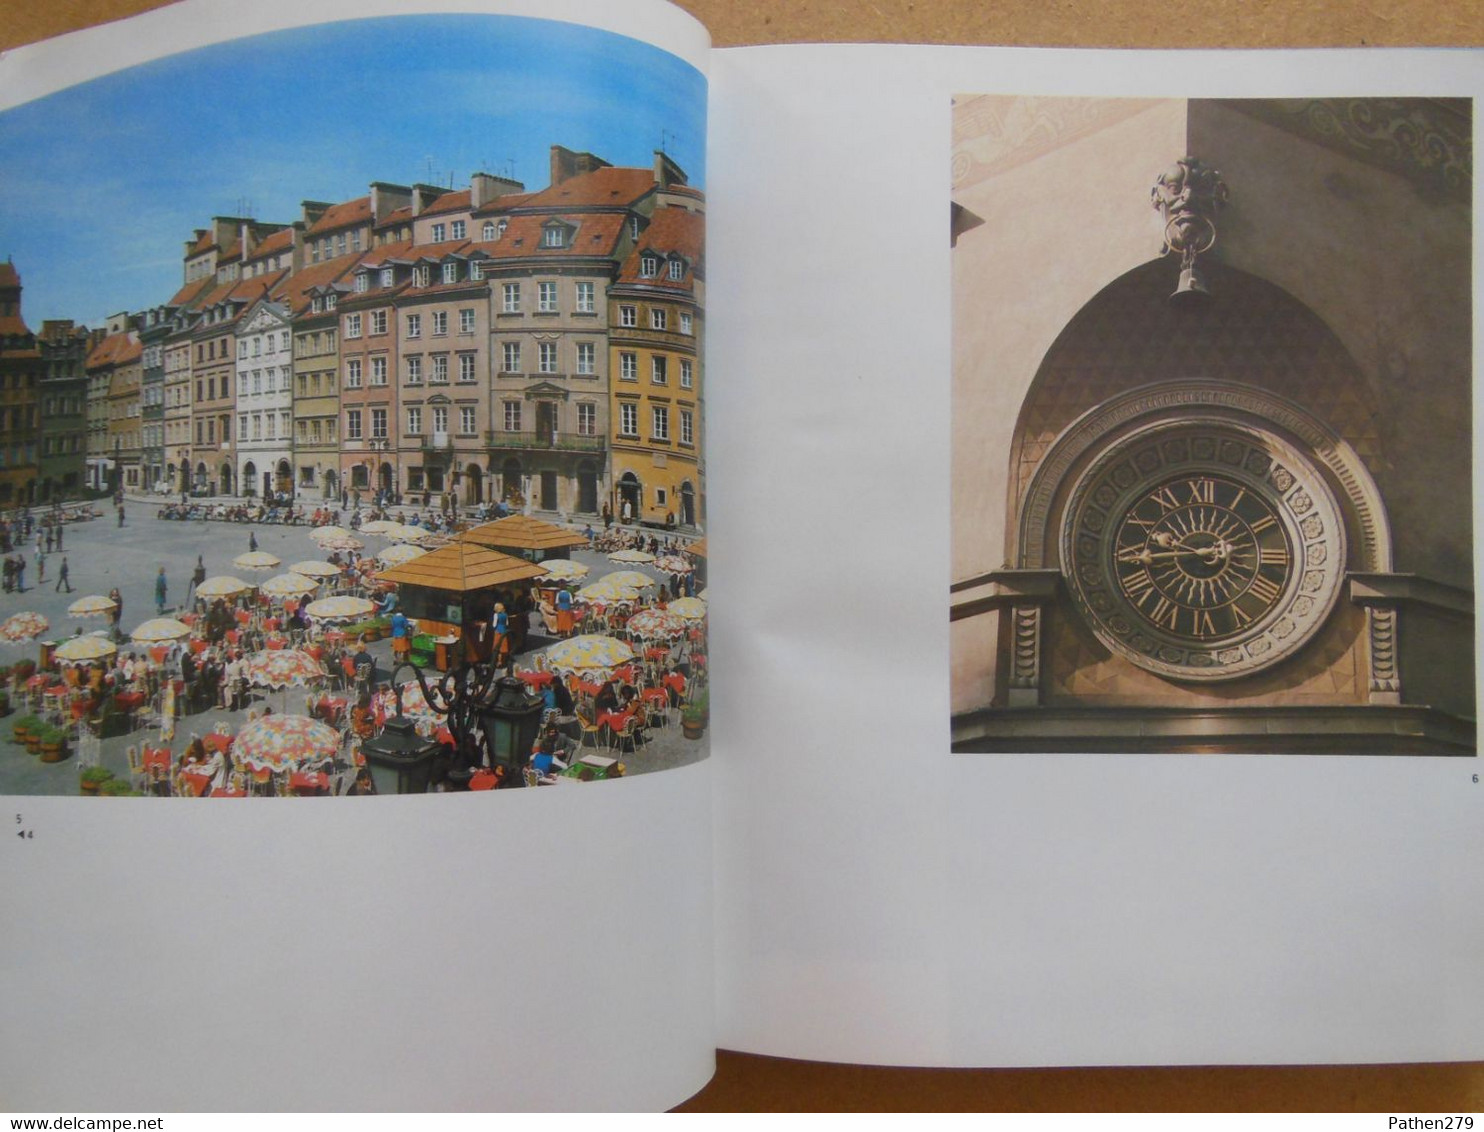 Livre - WARSAW A Portrait Of The City - Varsovie - Arkady 1984 - Europa